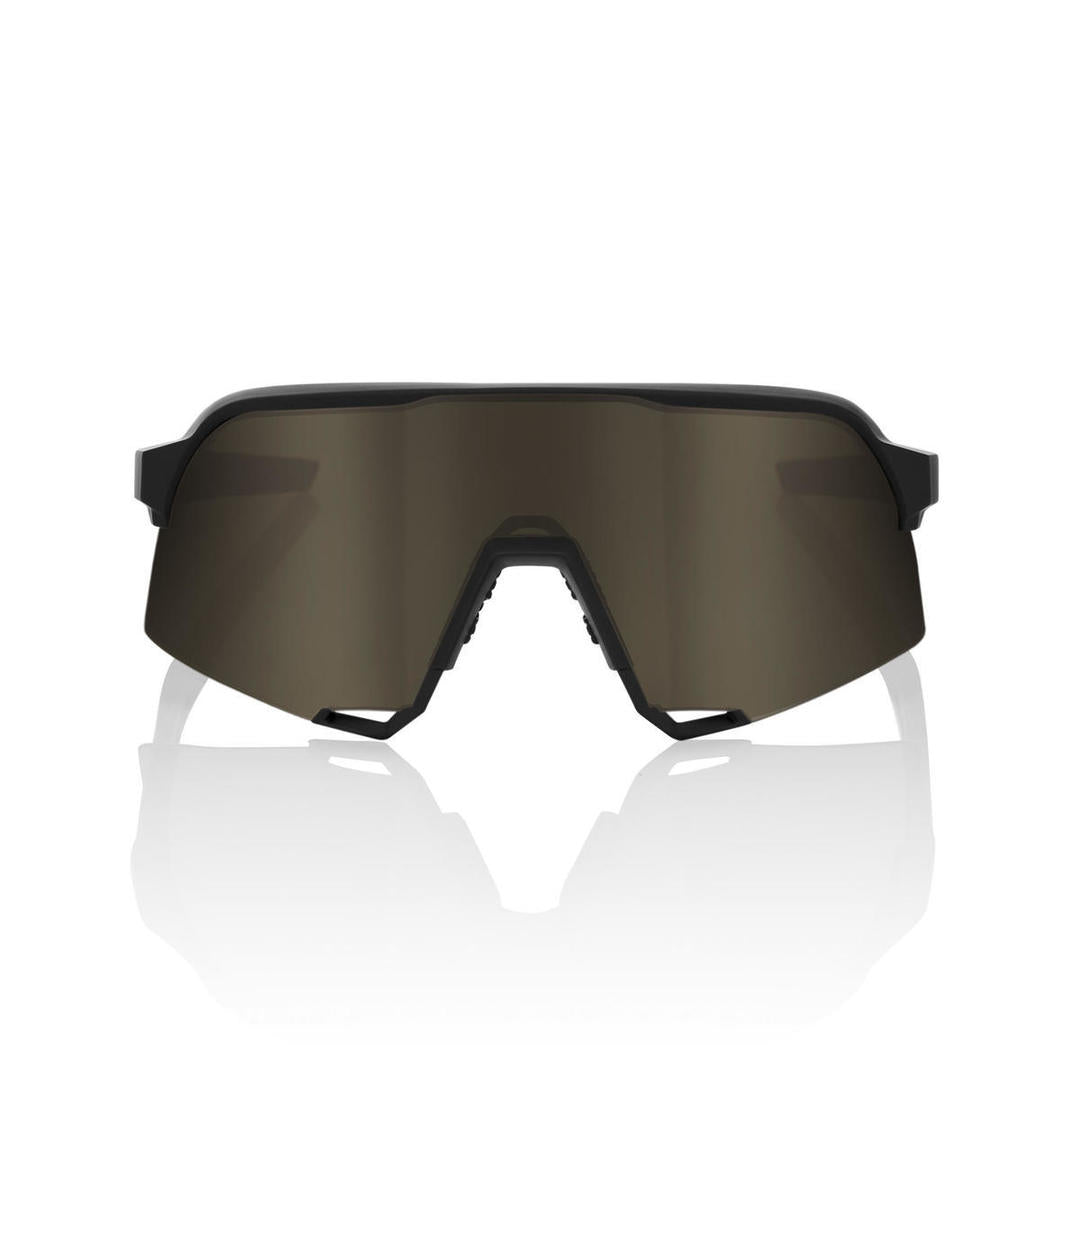 RIDE 100% Eyewear S3 Soft Tact Black - Soft Gold Lens